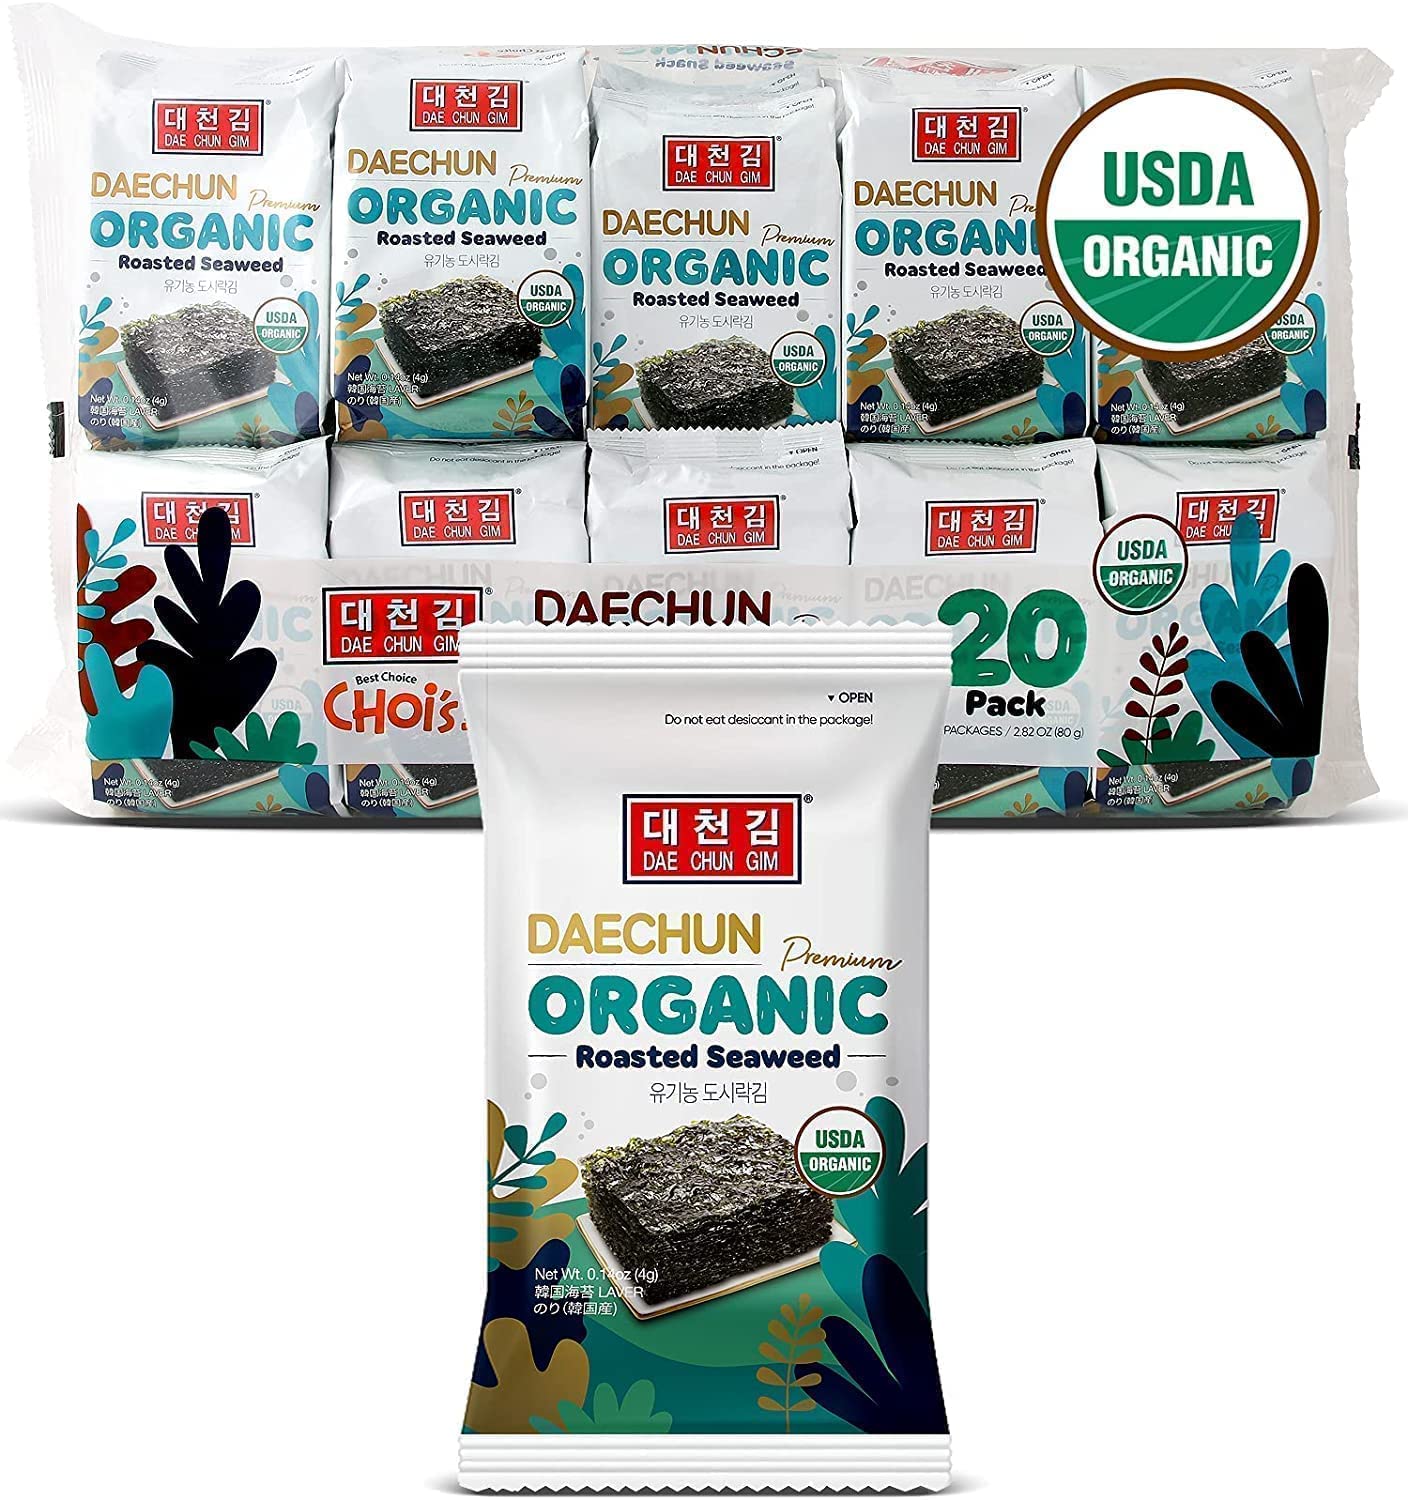 Organic DAECHUN(Choi’s1) Seaweed Snacks, 20 Pack, Original, Vegan, Keto, Gluten-Free, Product of Korea